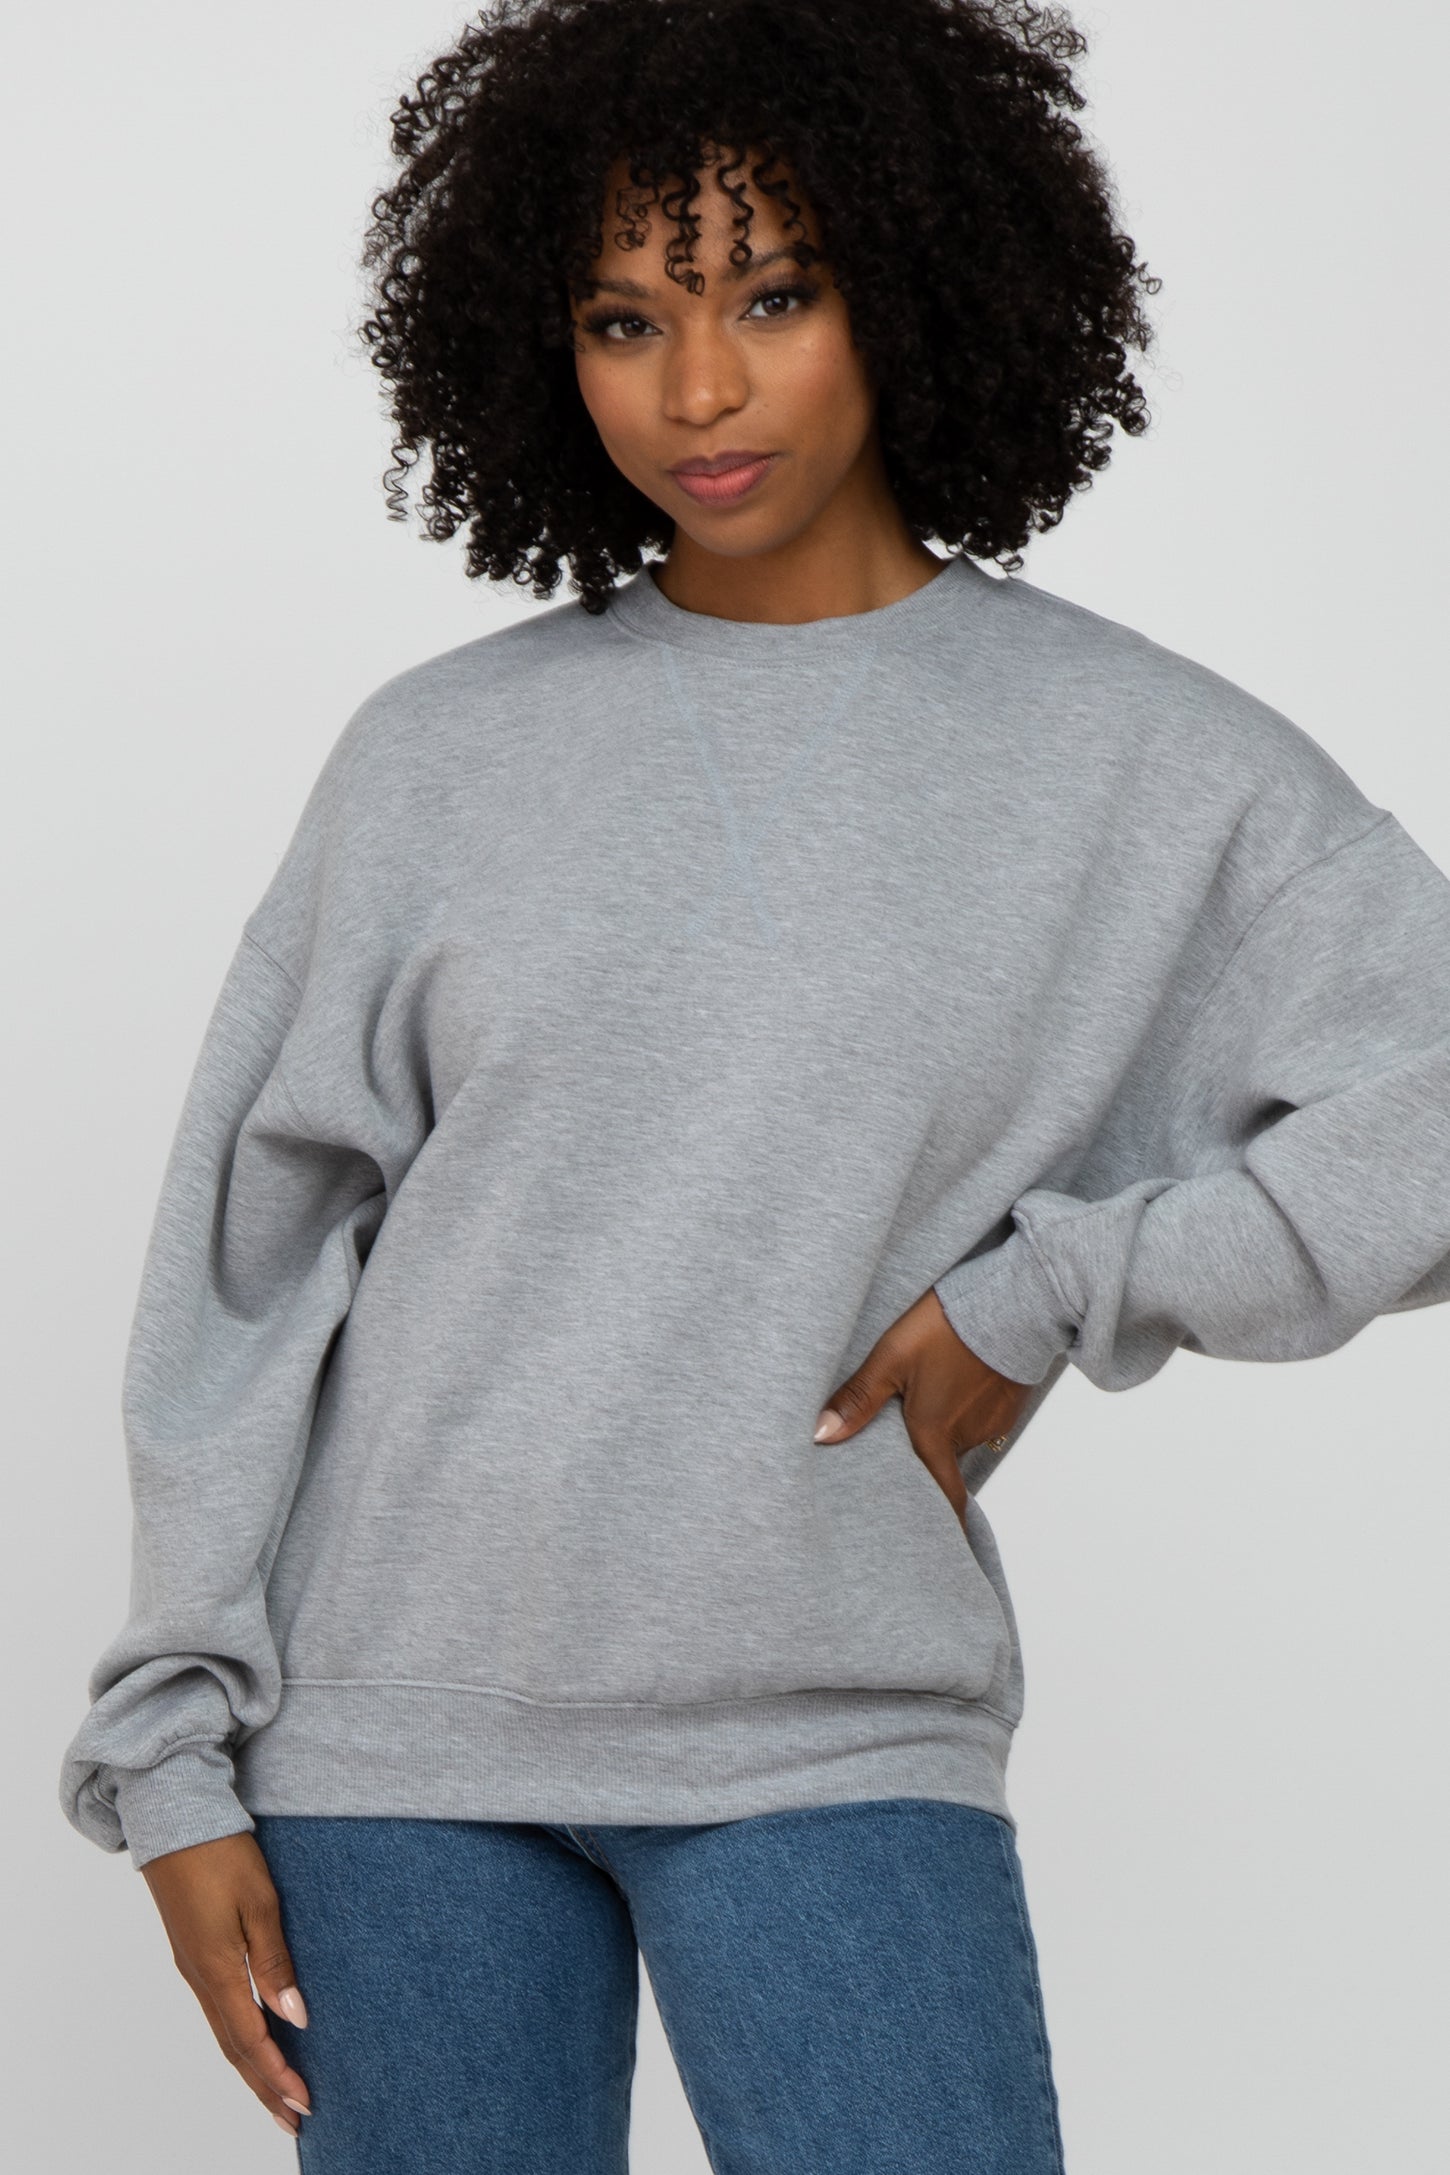 Heather Grey Soft Pullover Maternity Sweatshirt